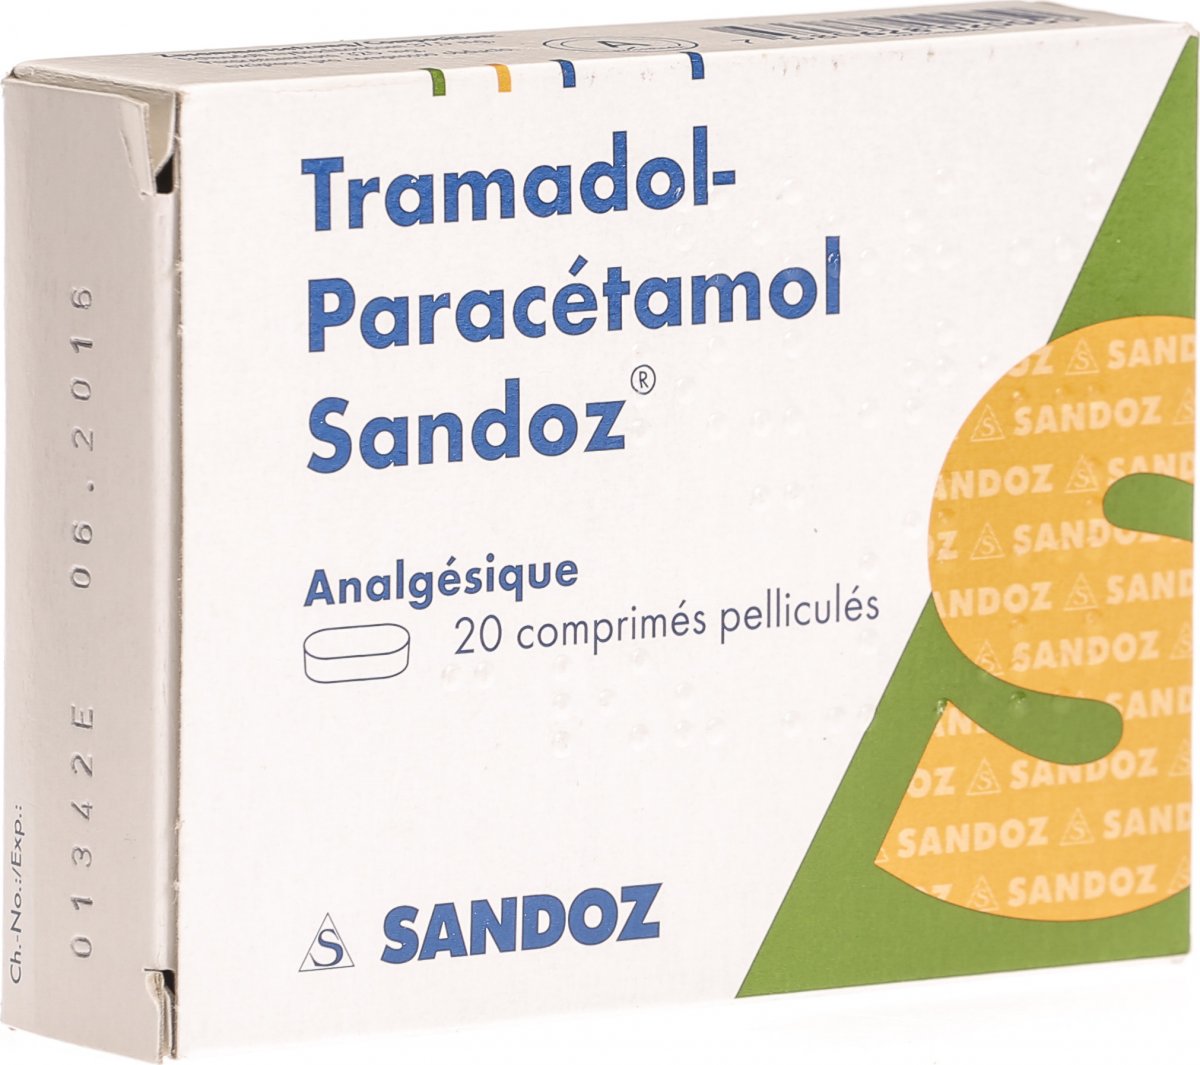 Tramadol-paracetamol Sandoz 37.5/325mg 20 Stück in der ...